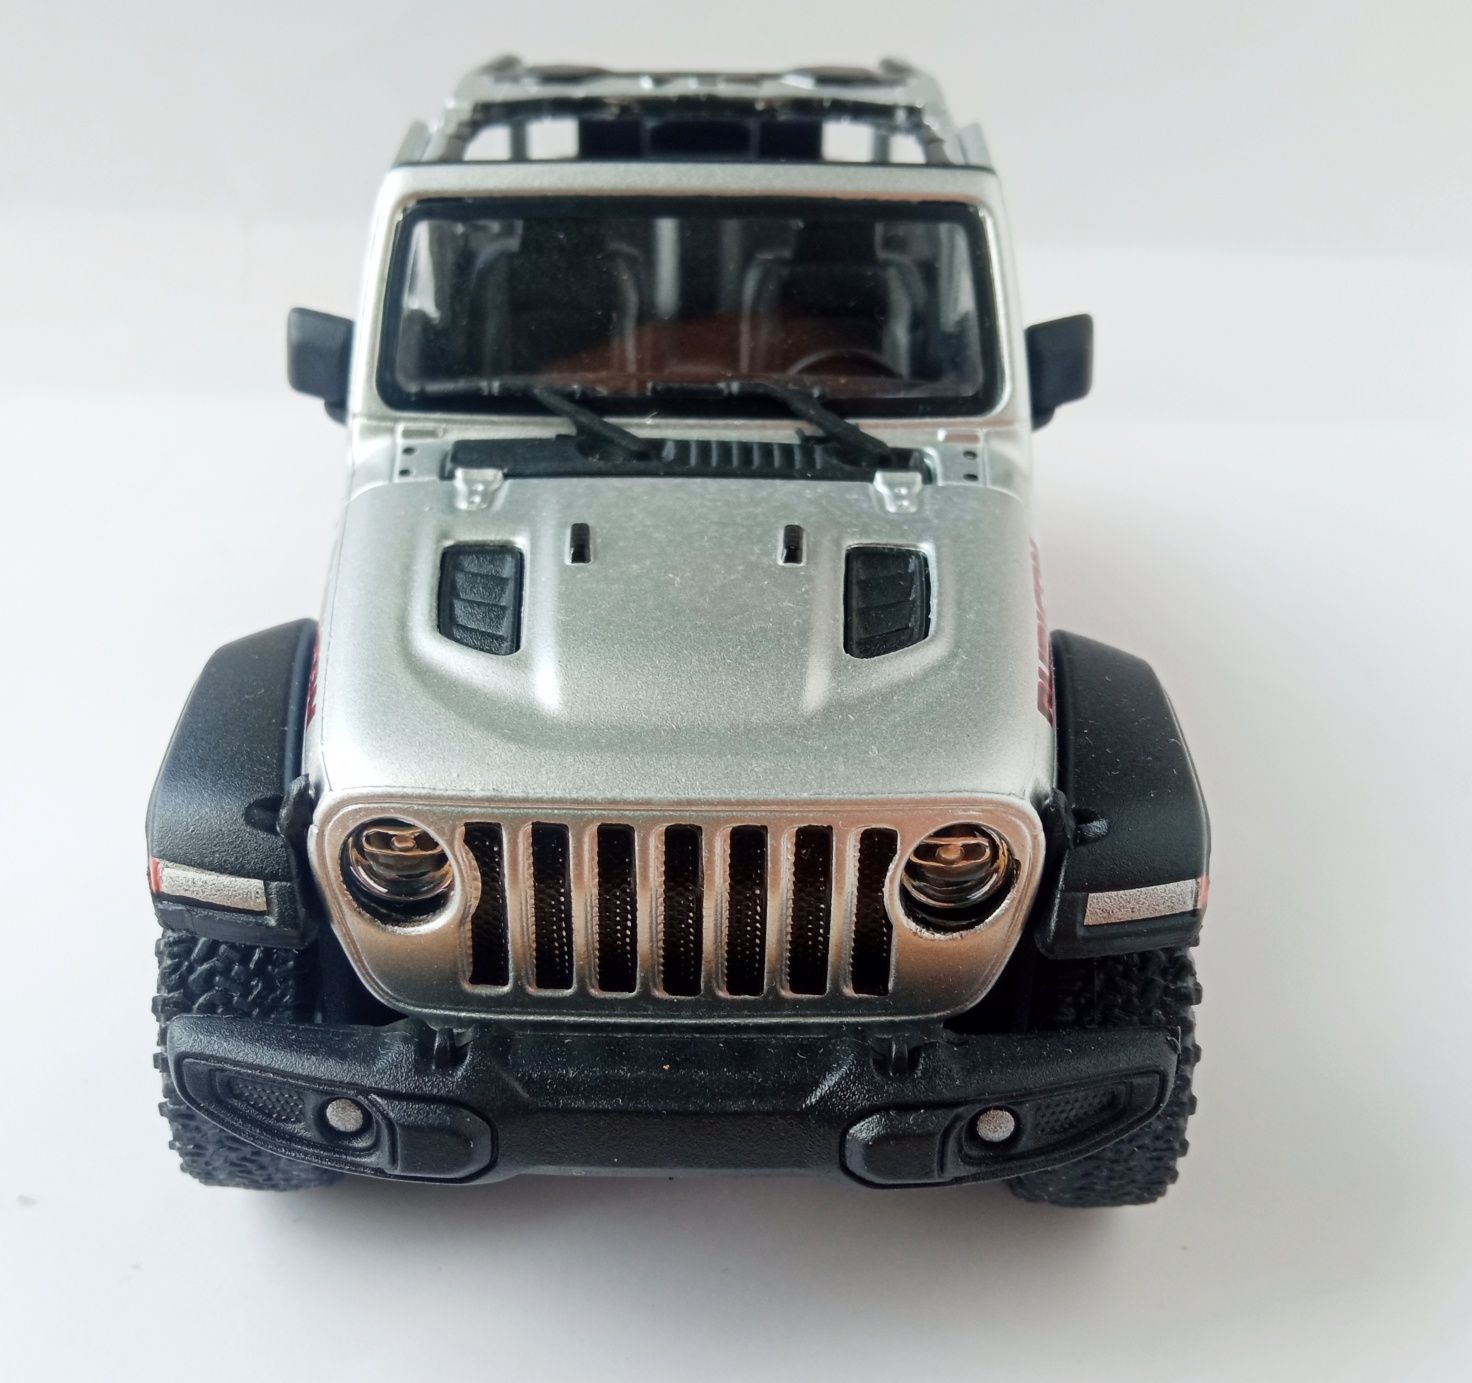 Jeep Wrangler Rubicon kinsmart die cast model